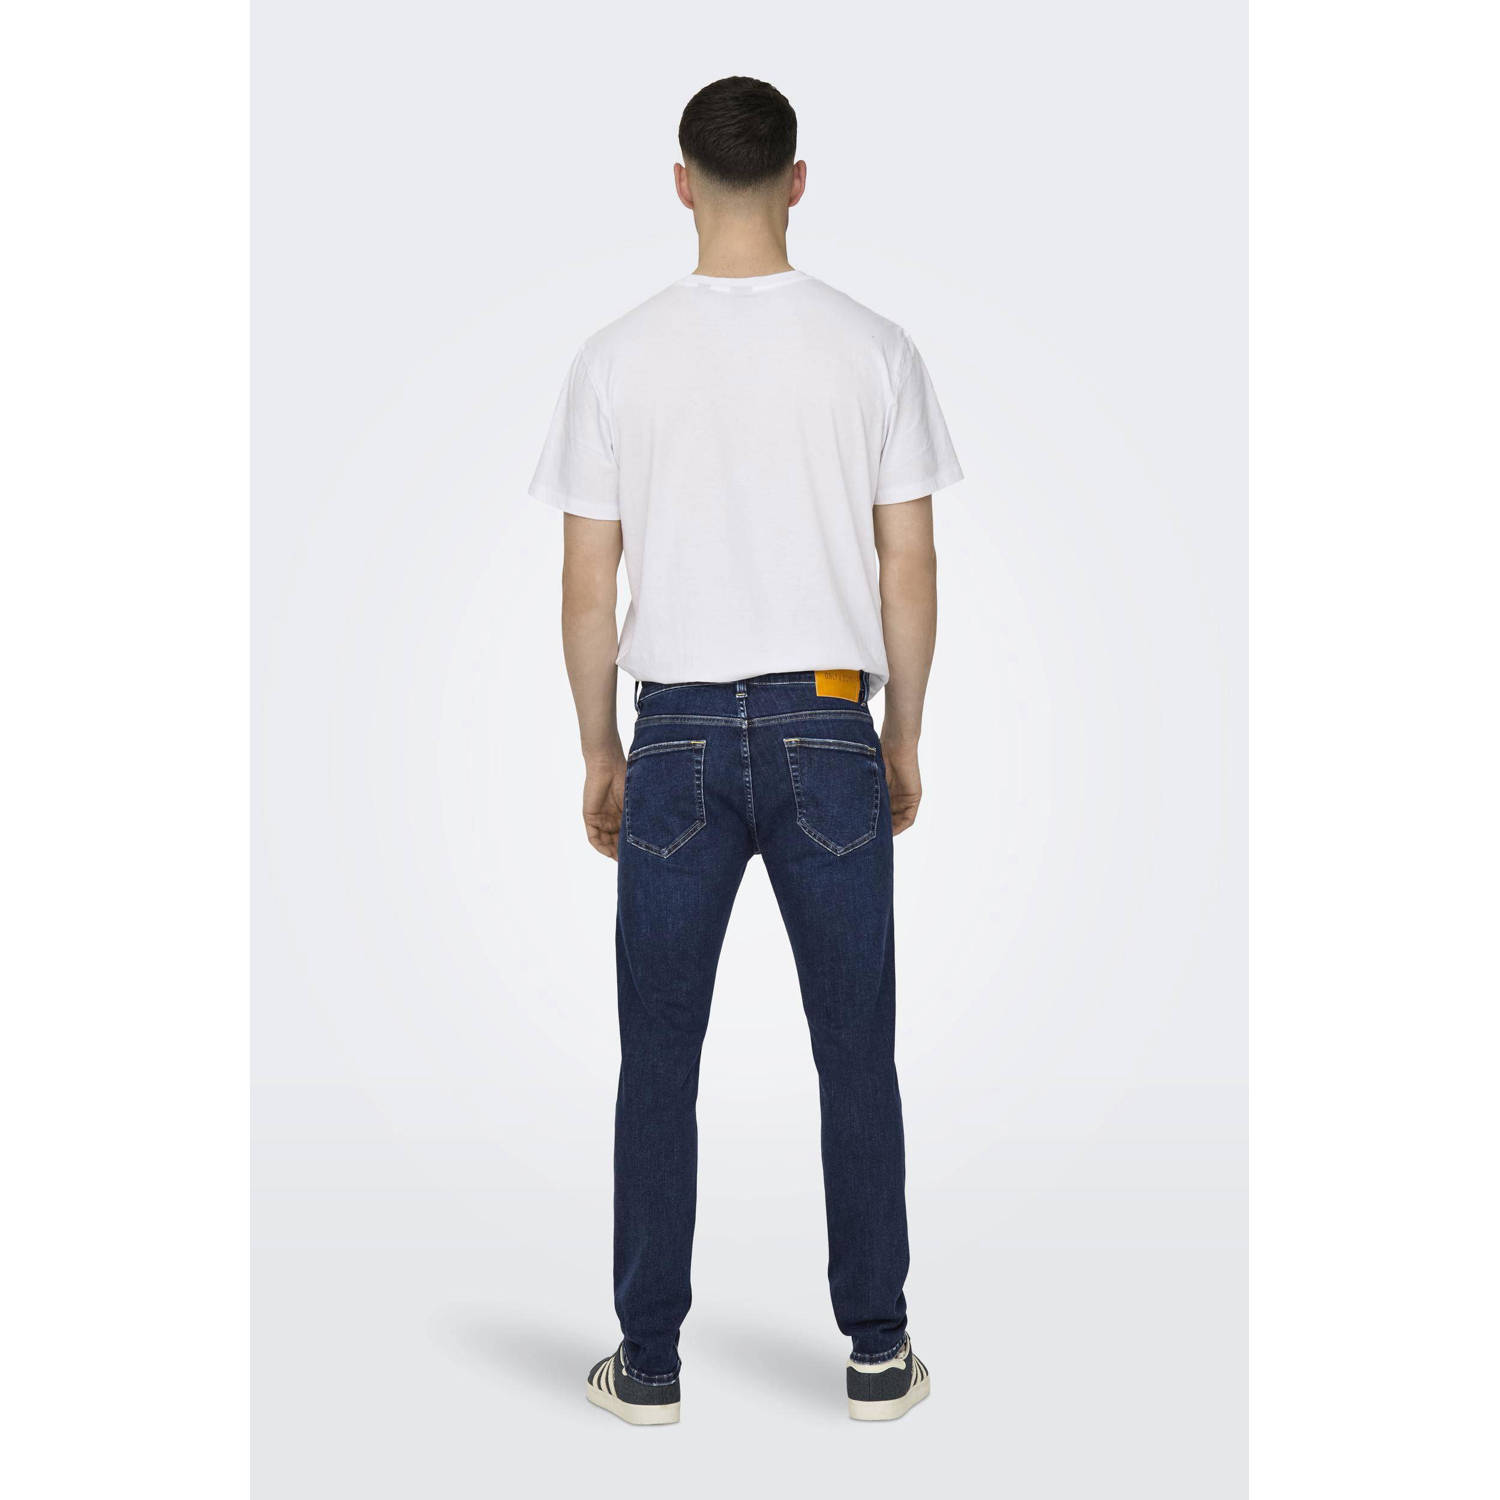 ONLY & SONS skinny jeans ONSWARP 9096 dark blue denim